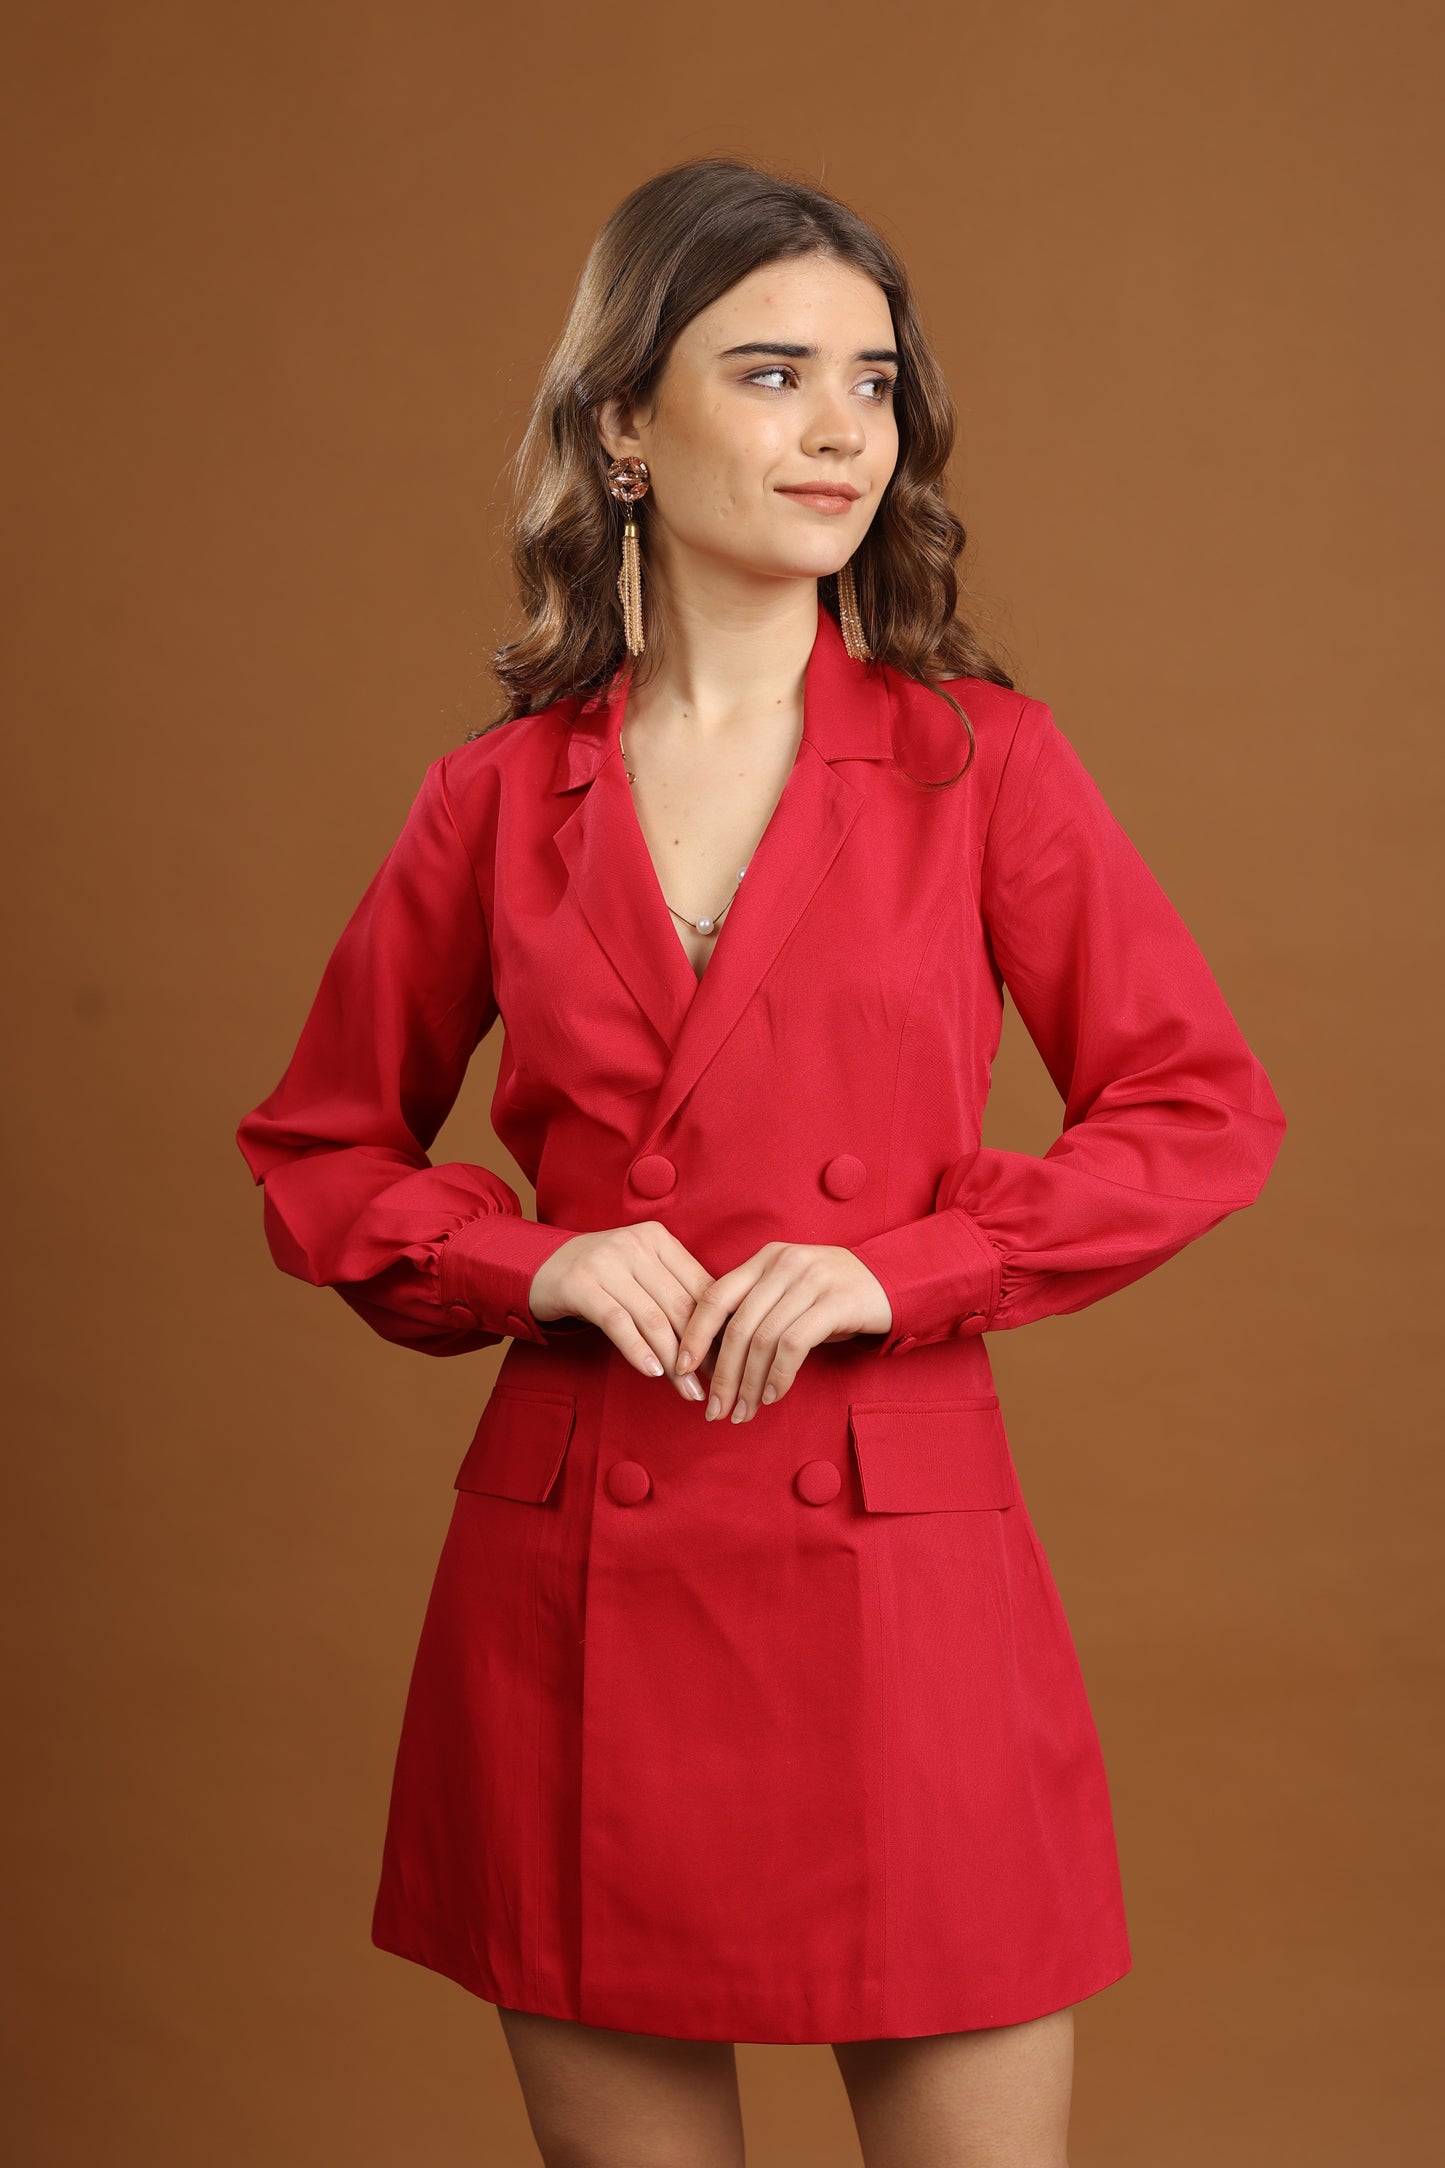 Sleek Sophistication: The Blazer Belle Dress